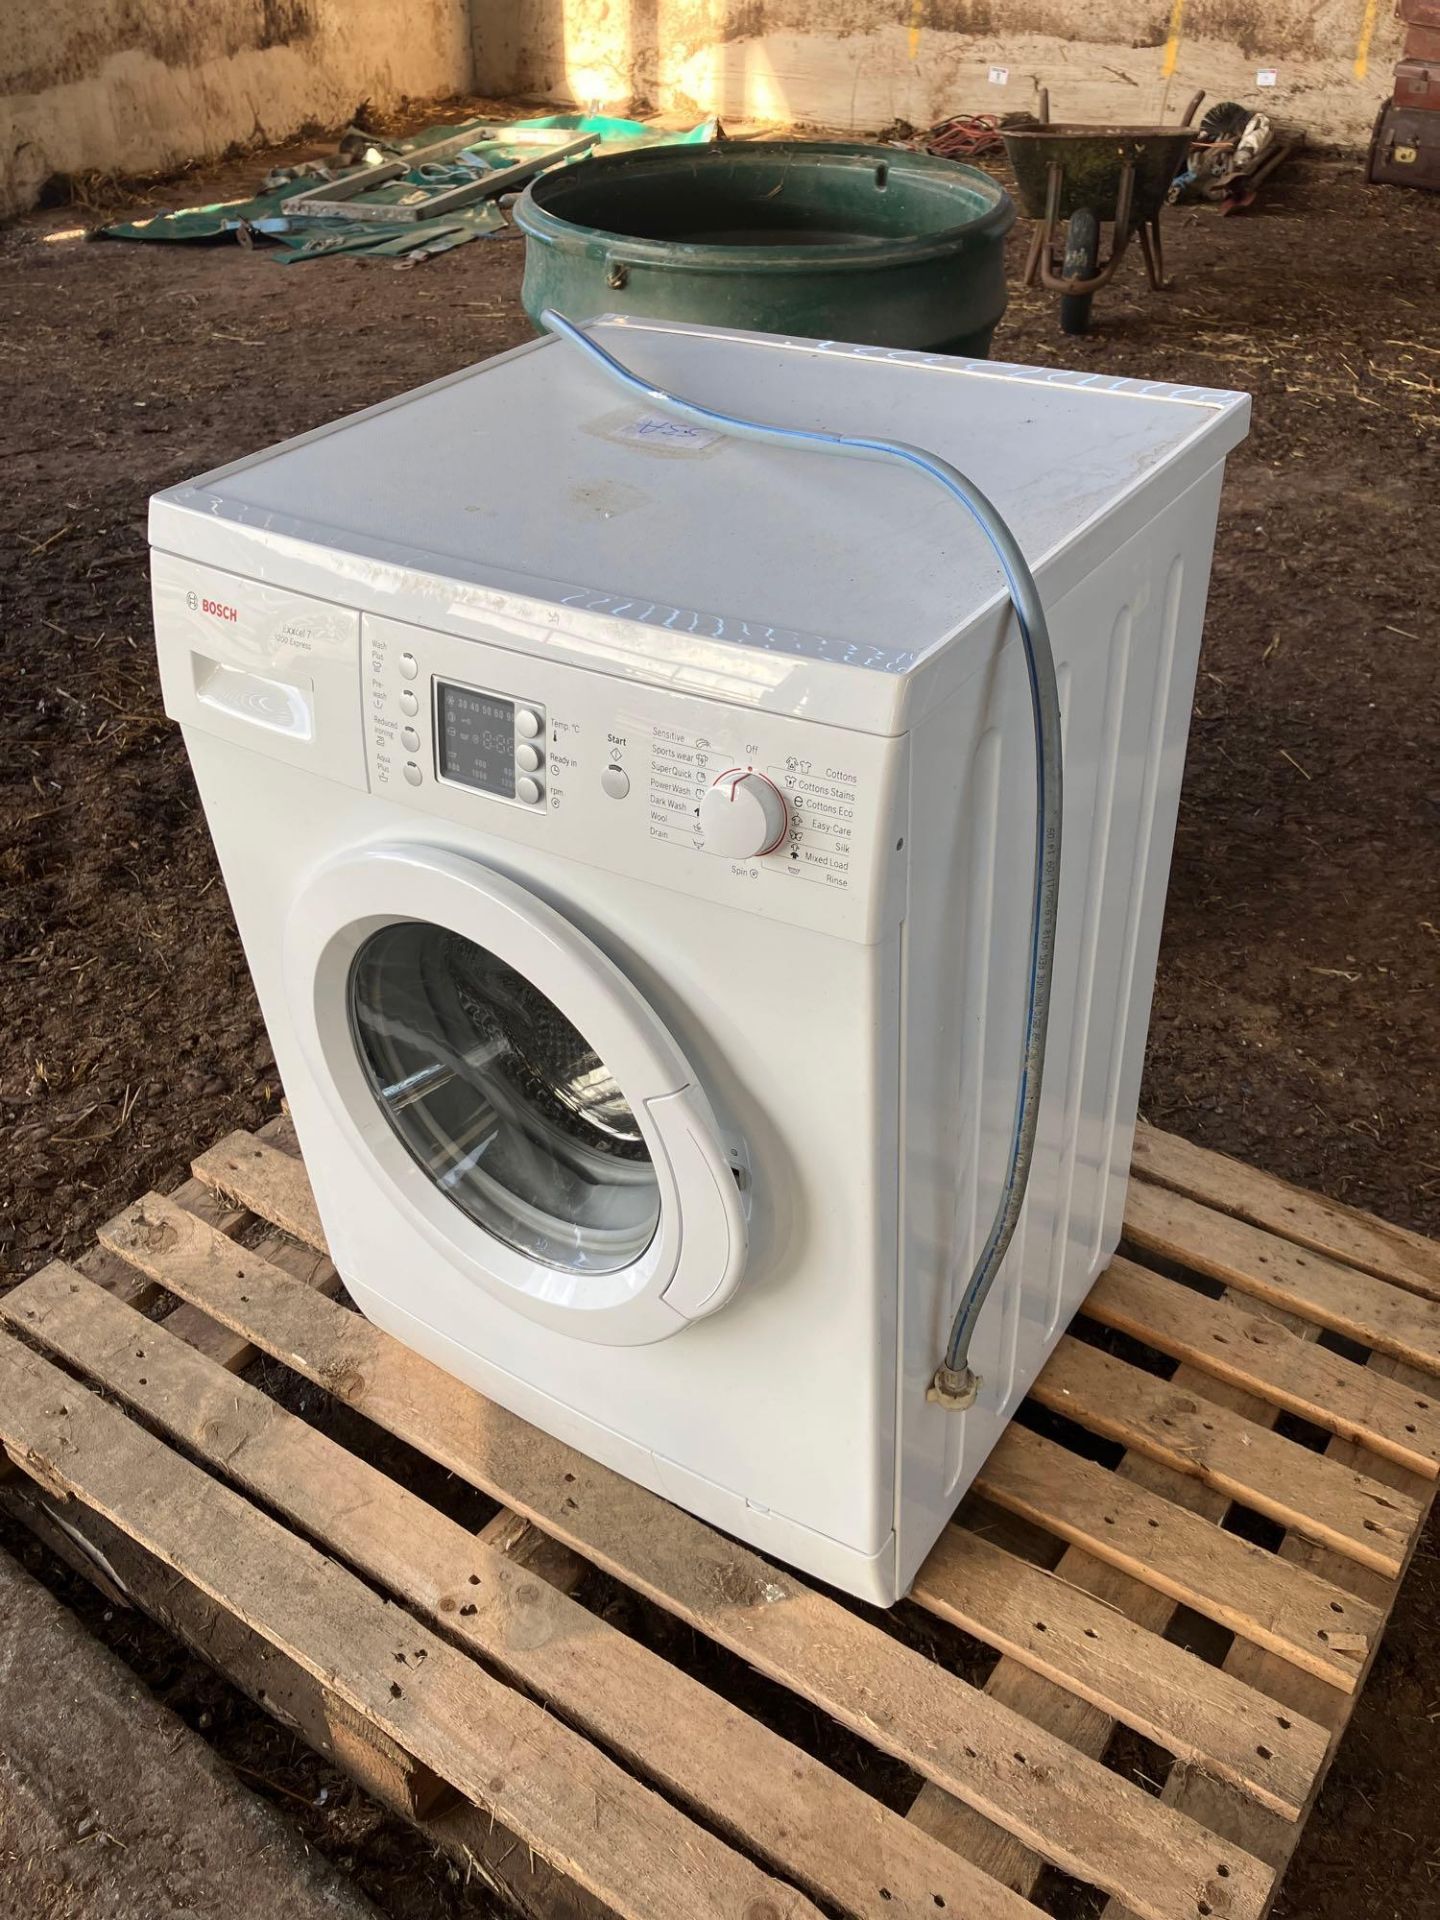 Bosch Exxcel 7 1200 washing machine